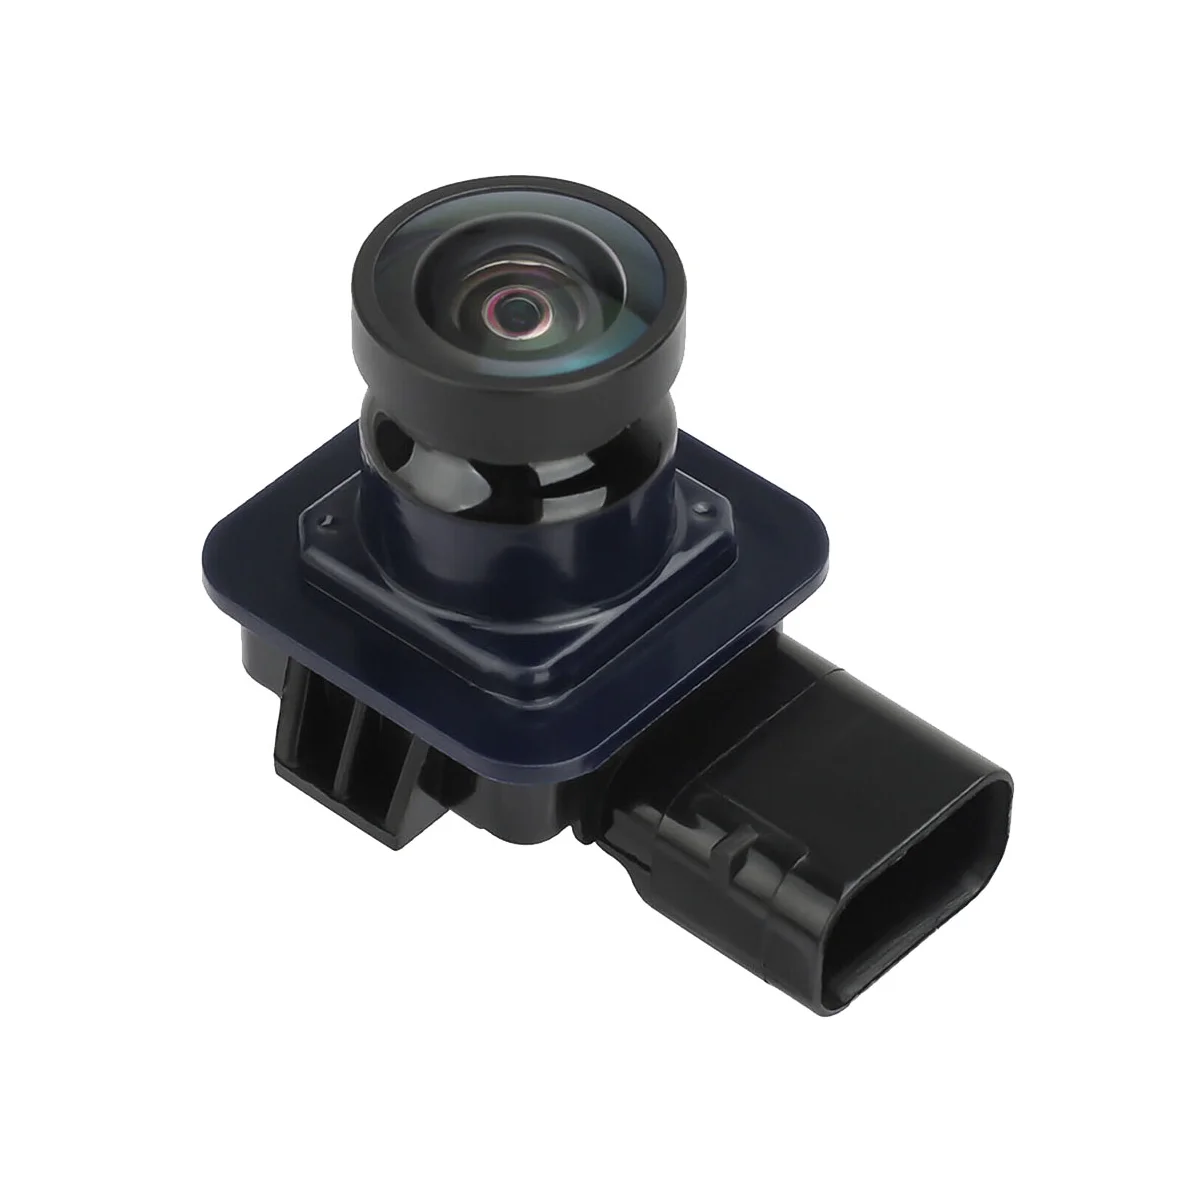 

EJ5Z19G490A New Rear View Reverse Camera Backup Camera for Ford Escape 2014-2016